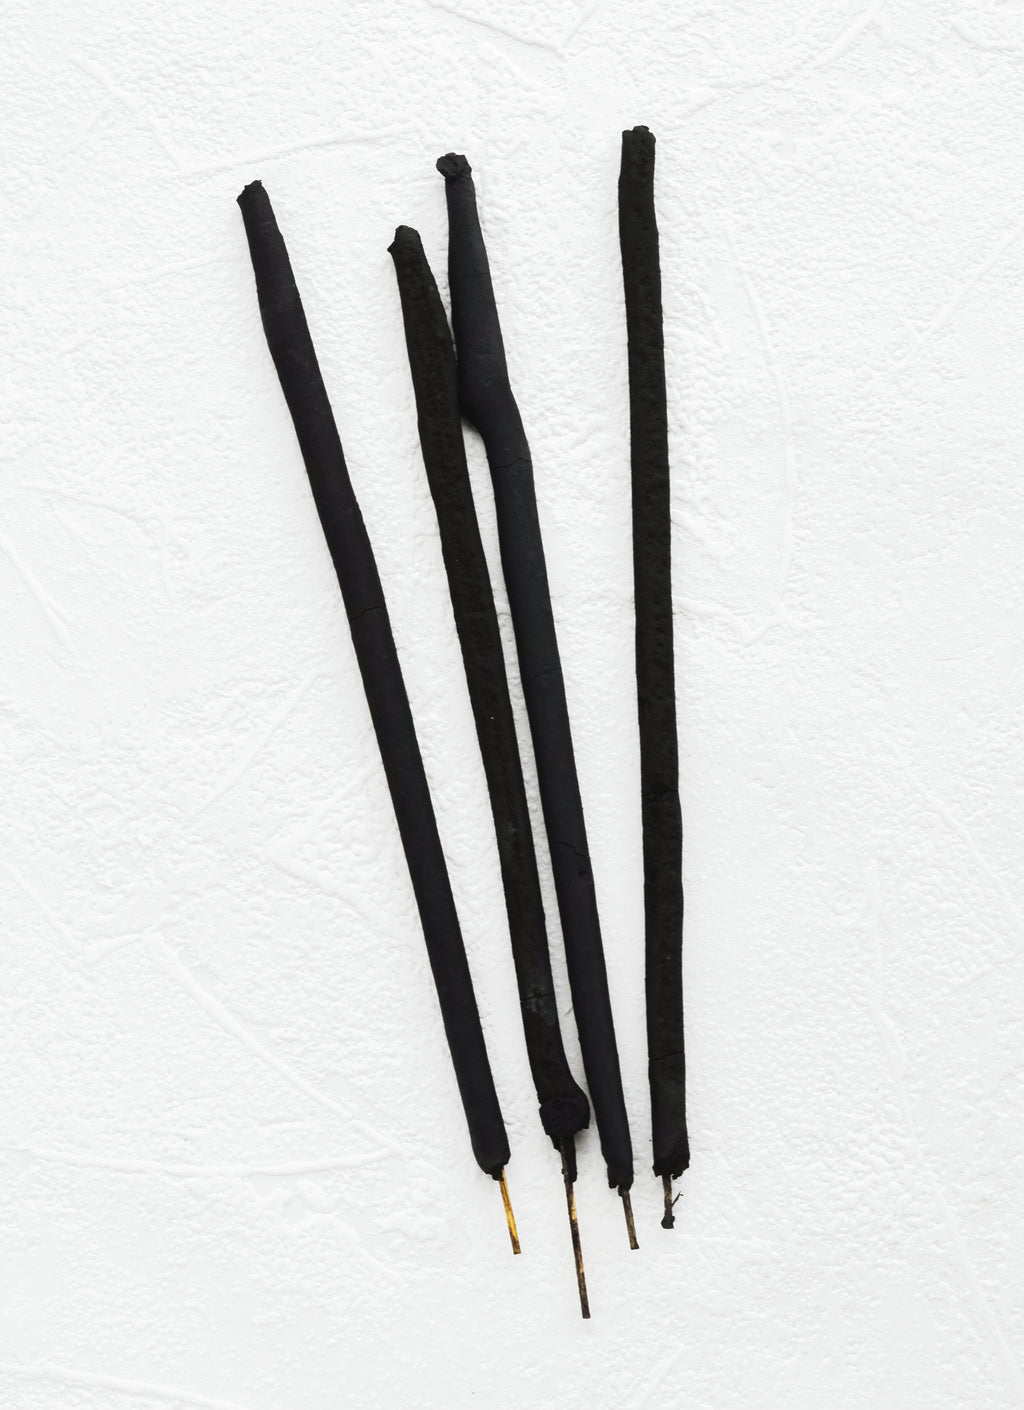 2: Black sticks of incense.